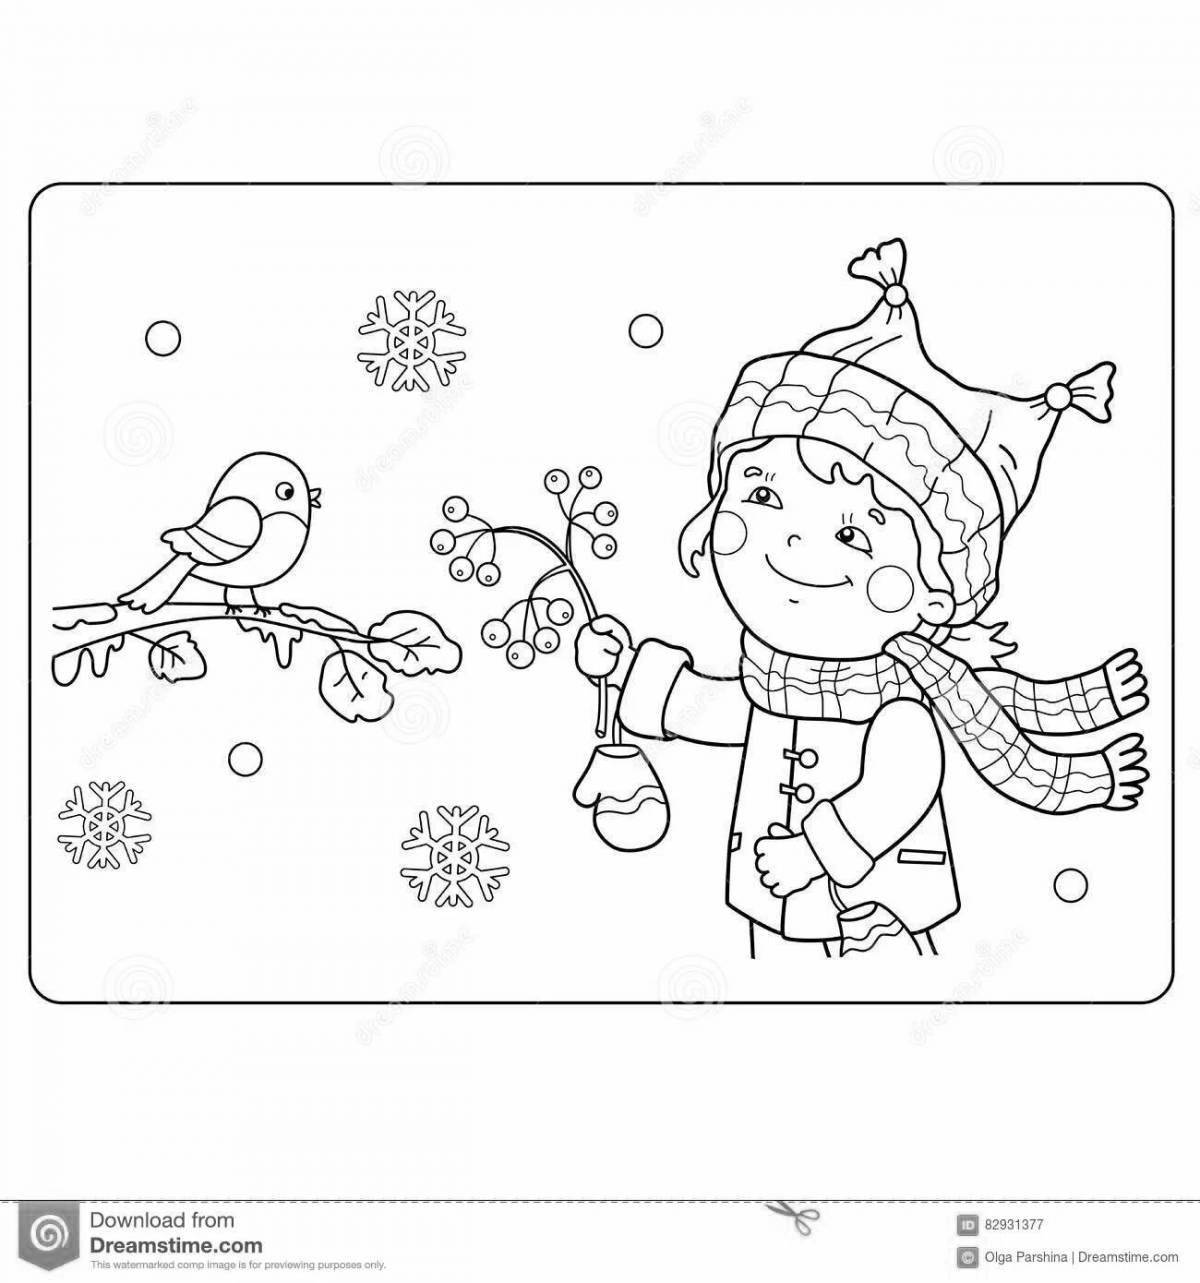 Feed the birds in winter creative for preschoolers